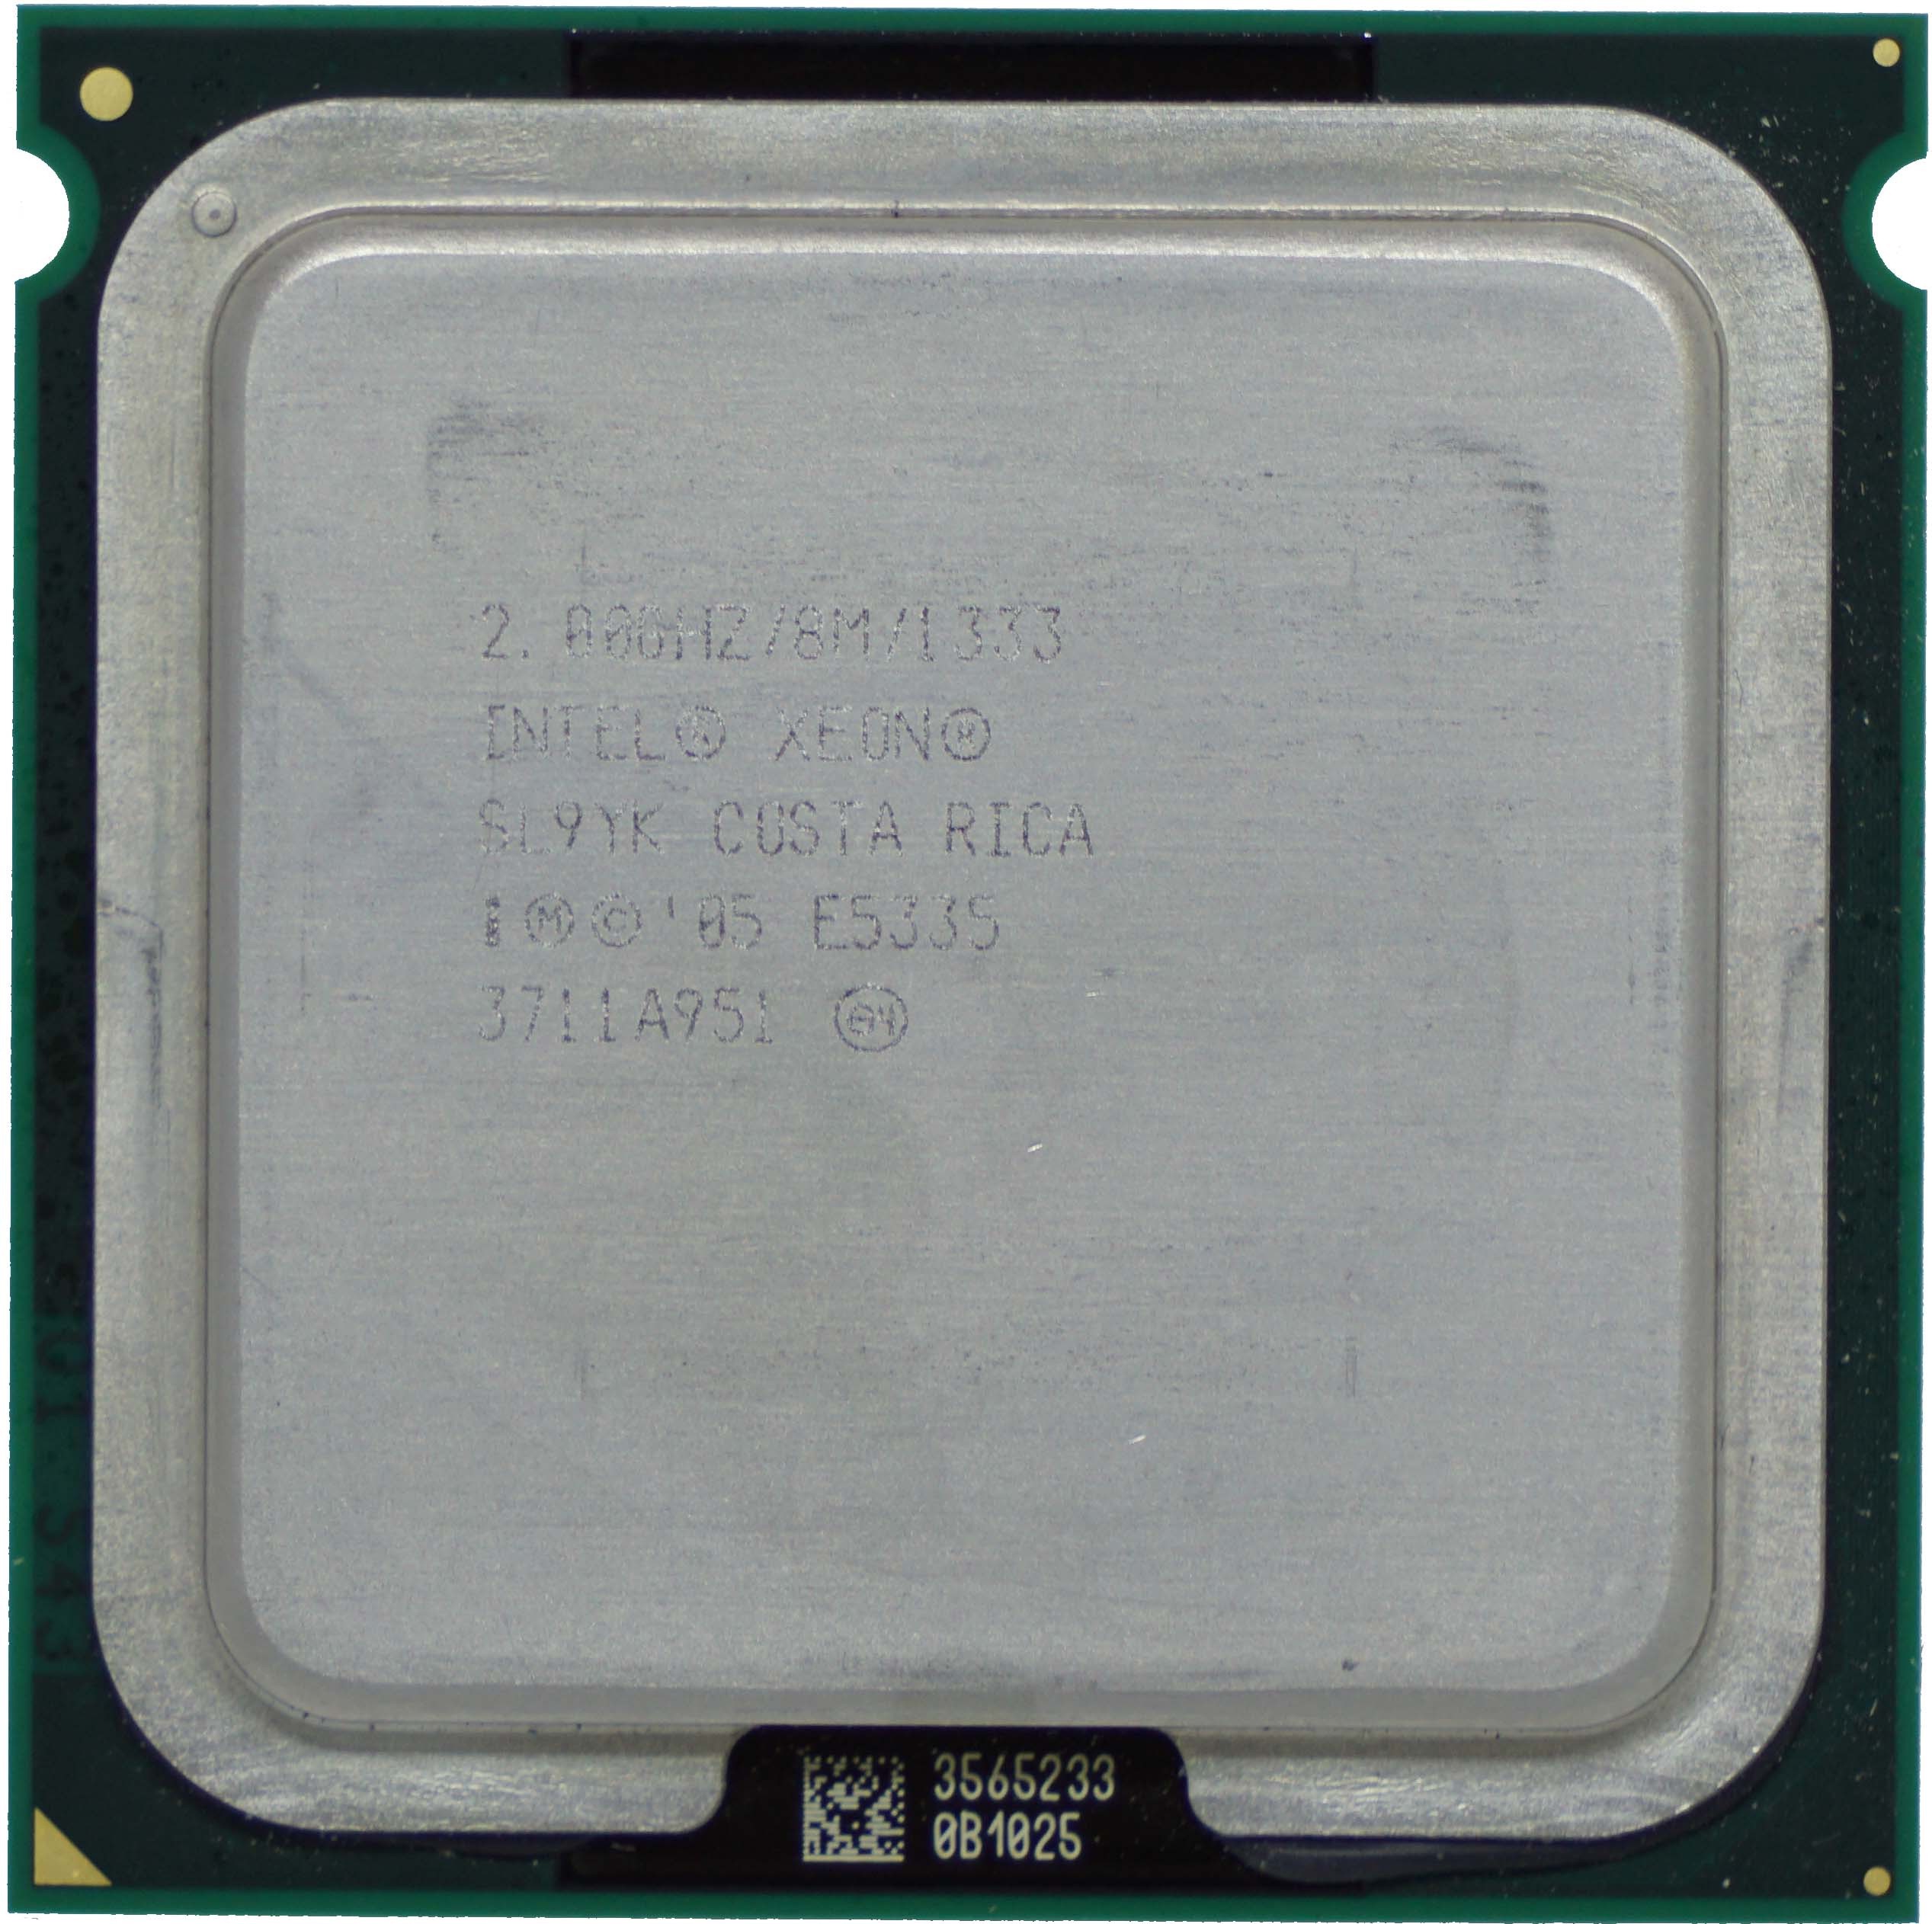 Intel Xeon E5335 (SL9YK) 4-Core 2.00GHz LGA771 8MB 80W CPU Processor